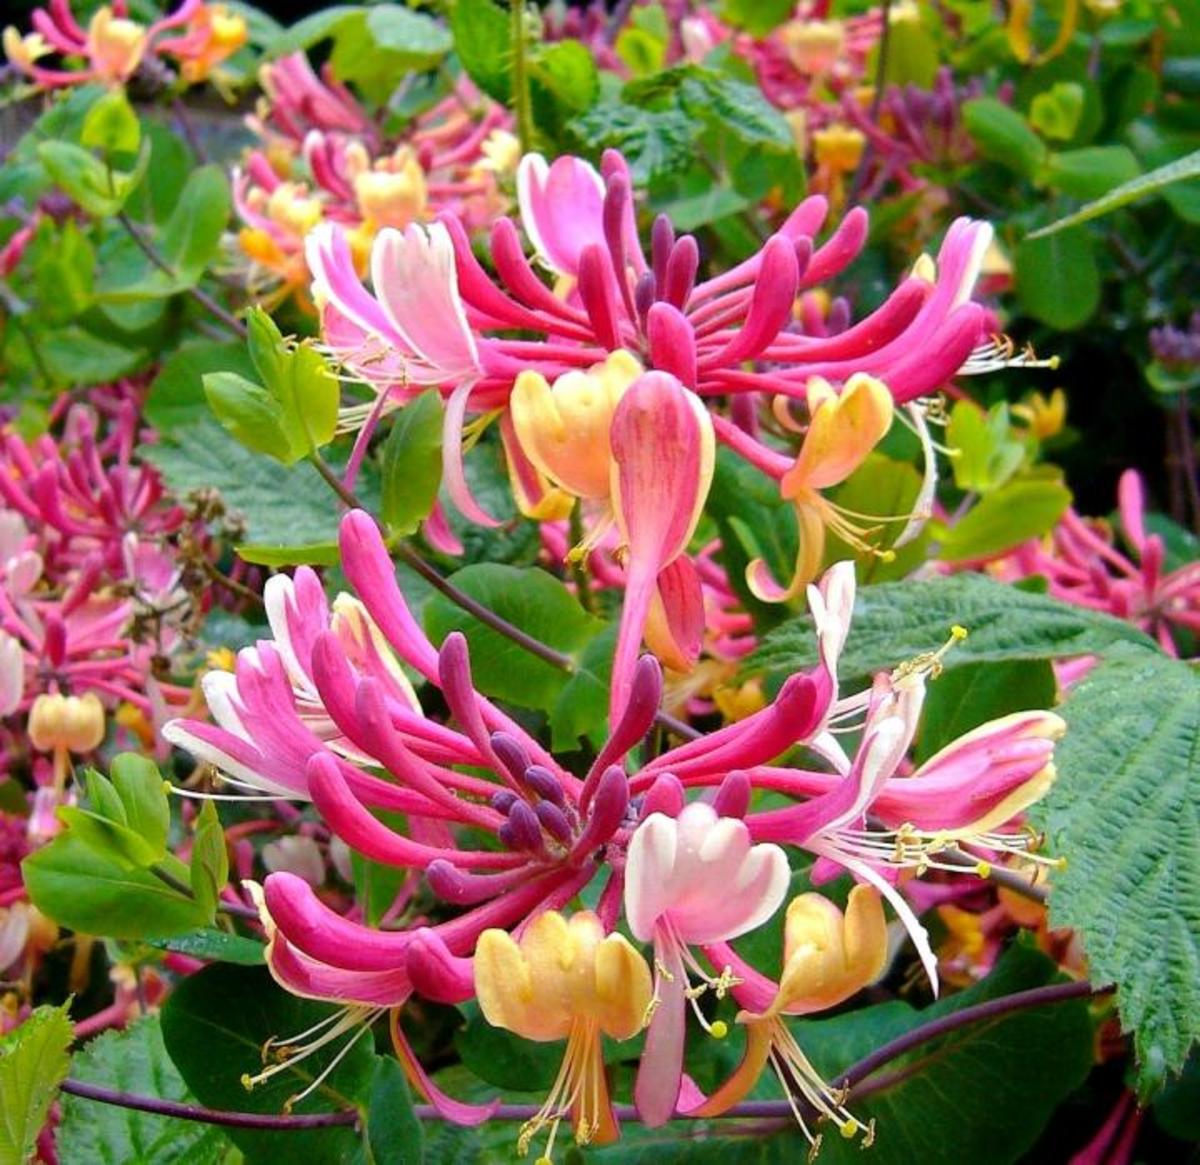 Honeysuckle is one of the flowers of June.